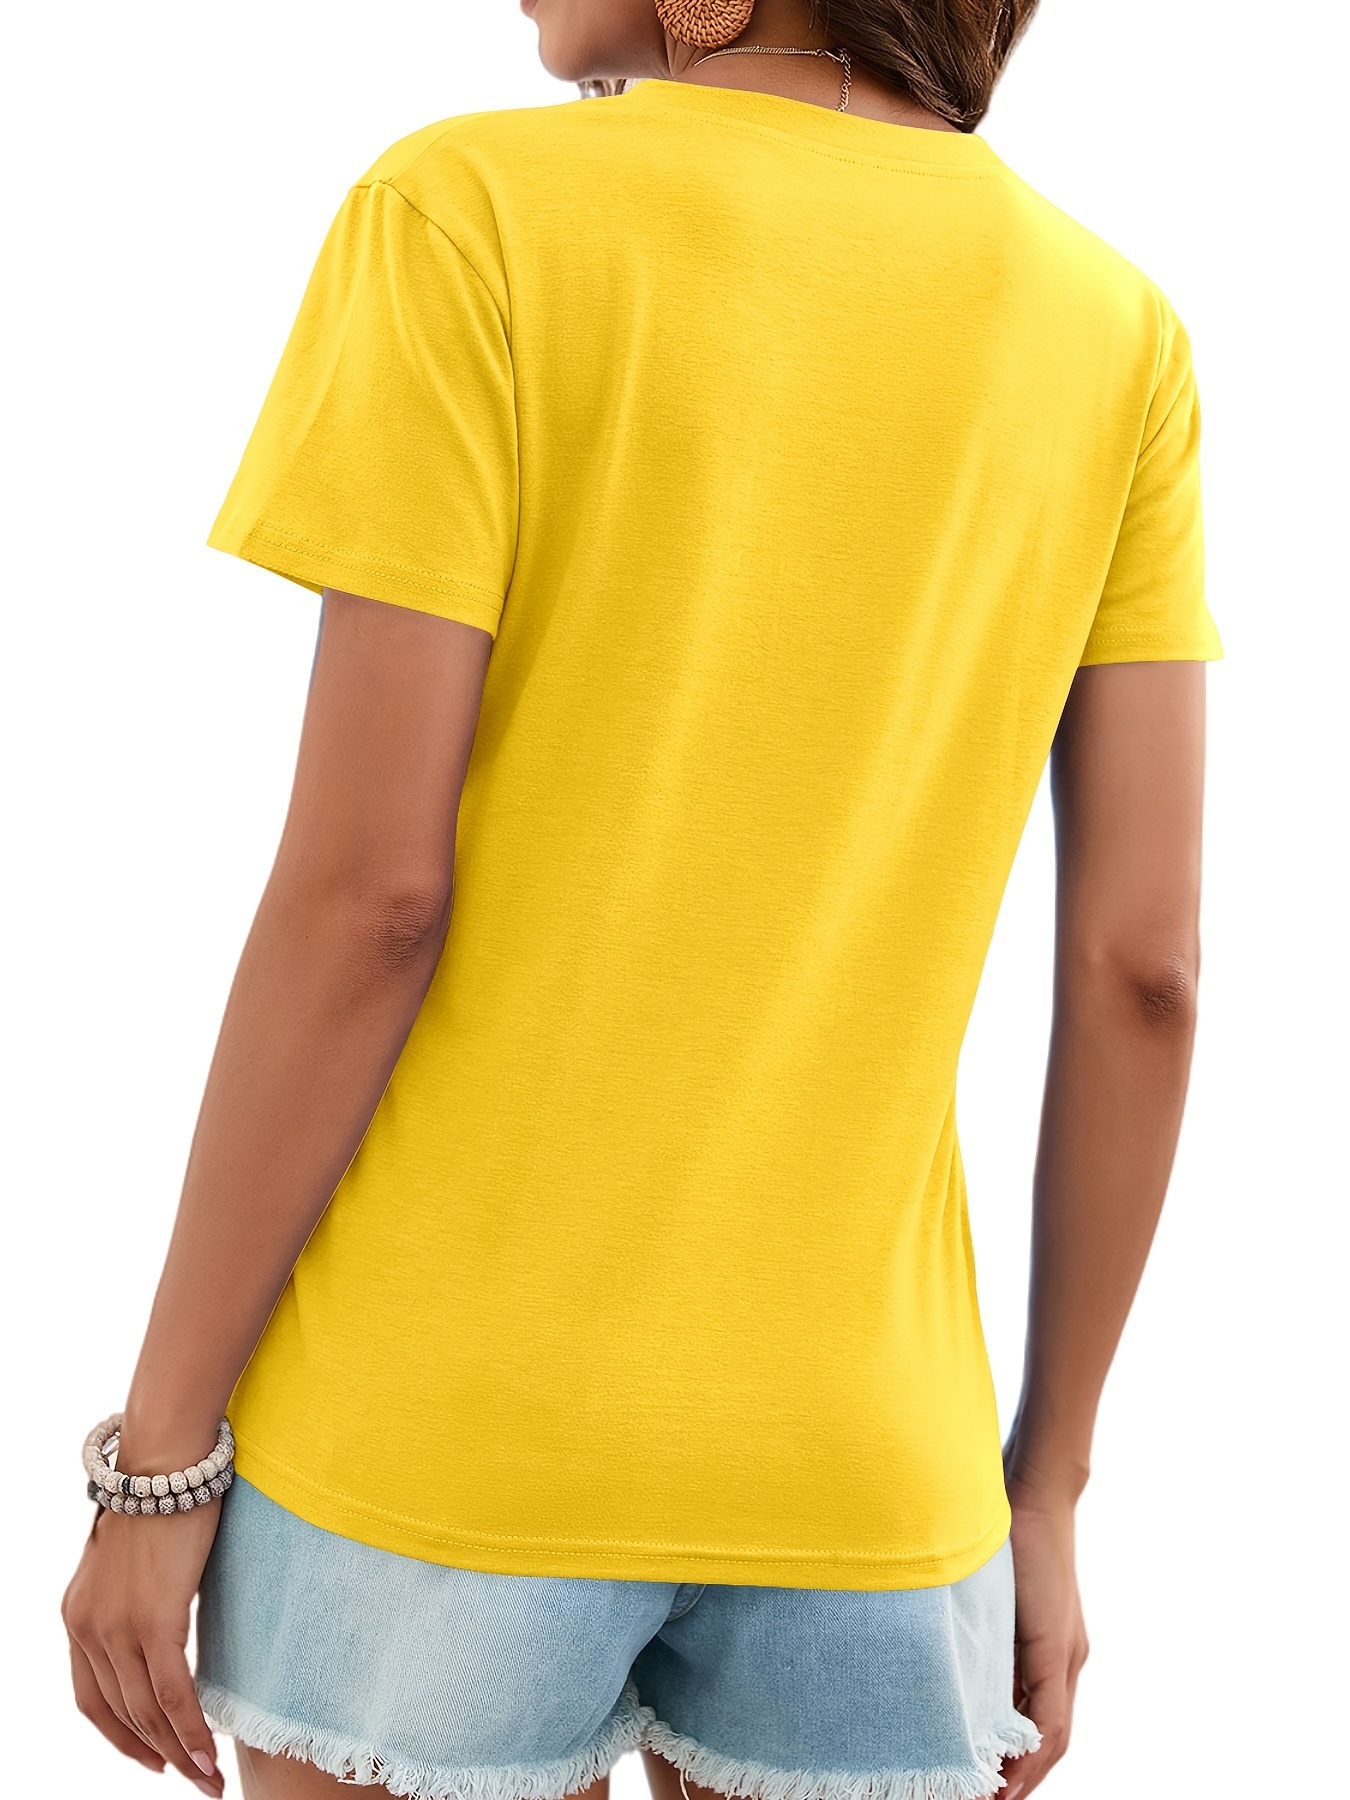 Camisetas de manga larga de gran tamaño para mujer, holgadas, informales,  cuello redondo, blusa suave, camiseta casual para mujer (amarillo, M)